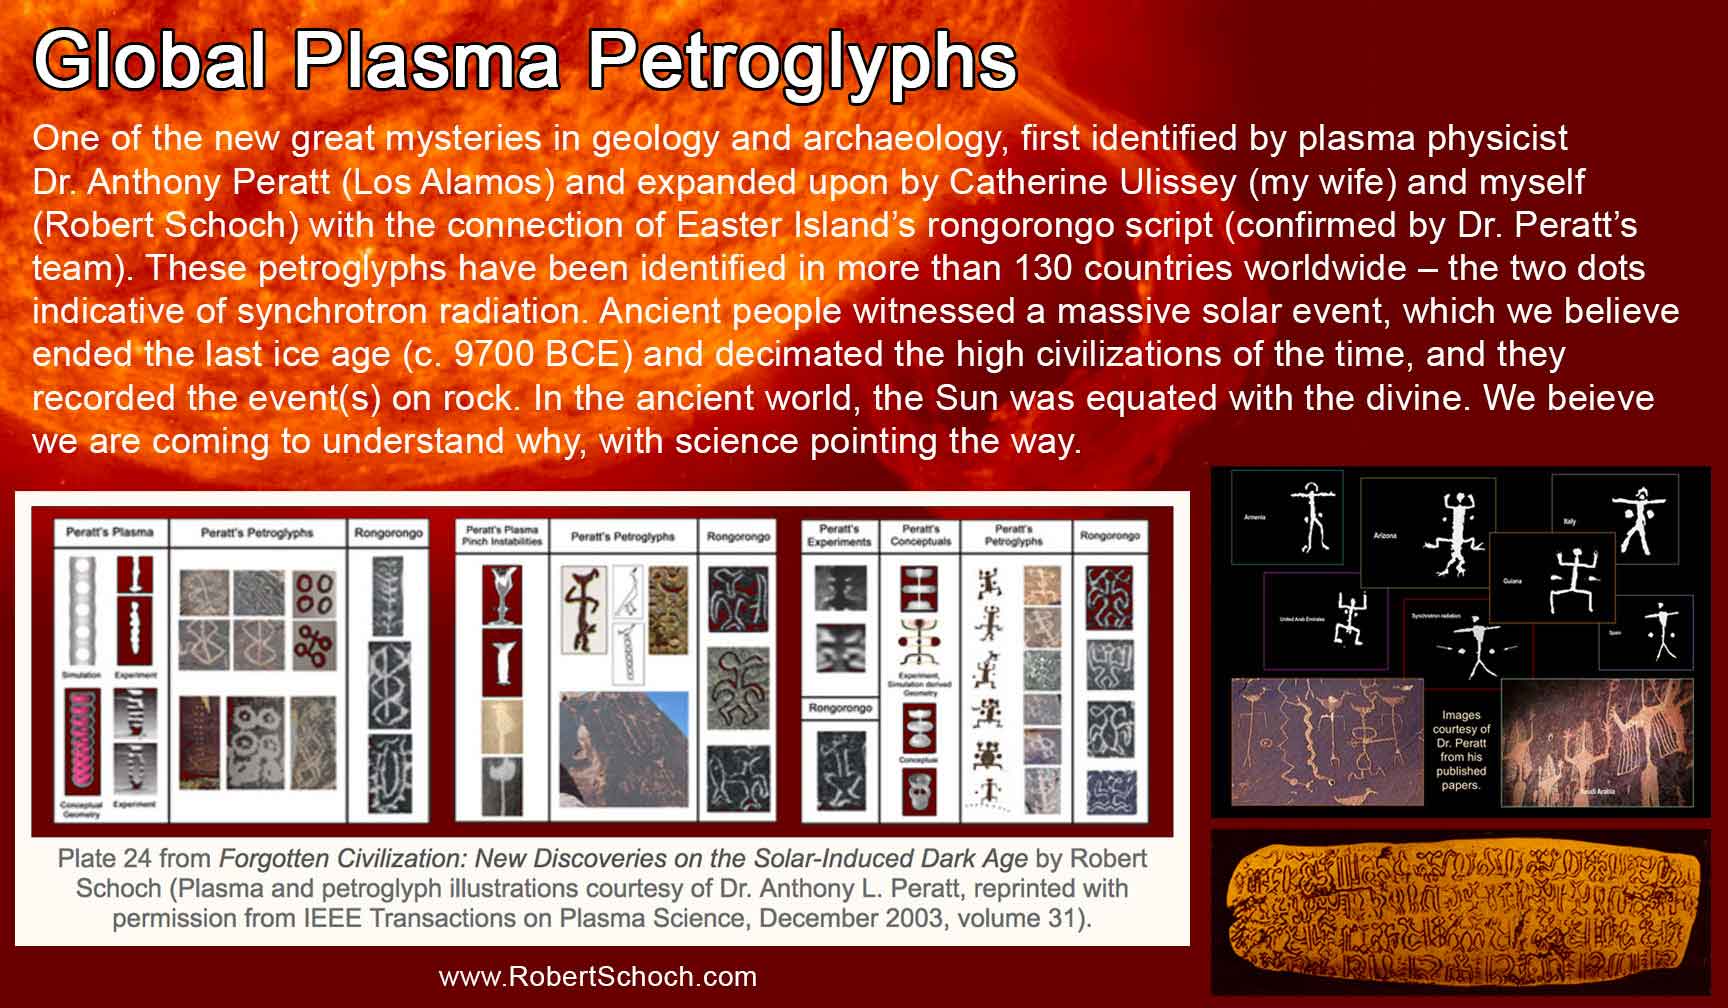 A meme regarding global plasma petroglyphs